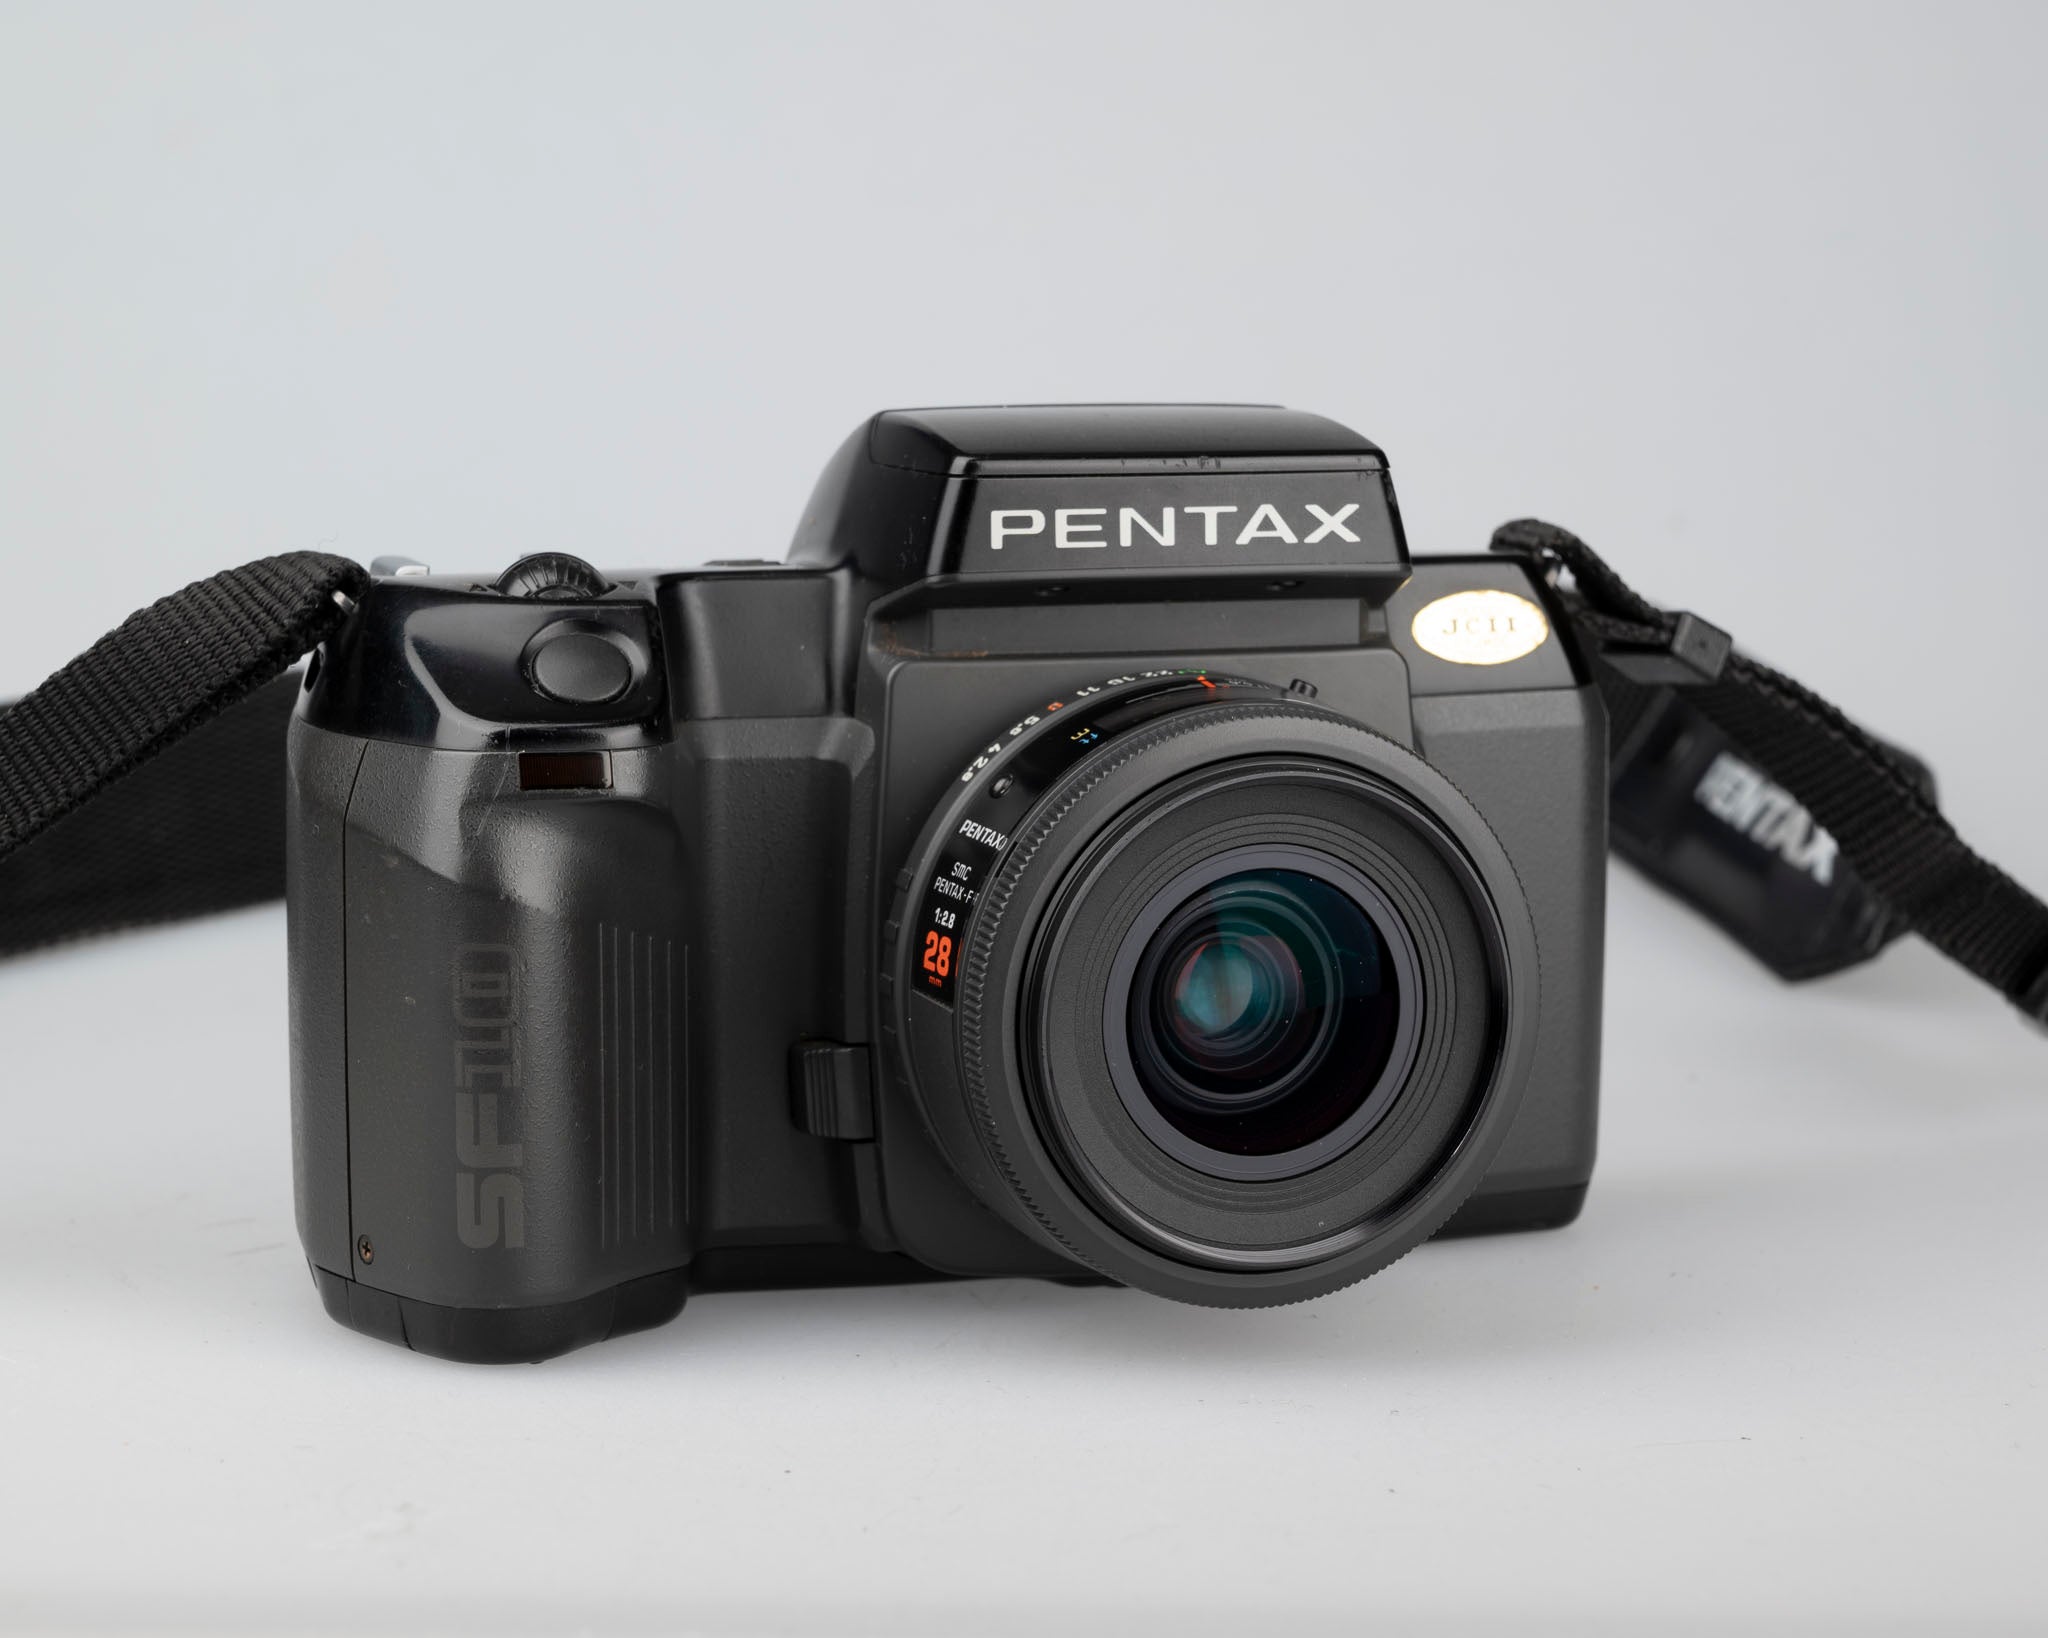 Pentax SF10 35mm SLR w/ SMC Pentax-F 28mm f2.8 compact prime lens